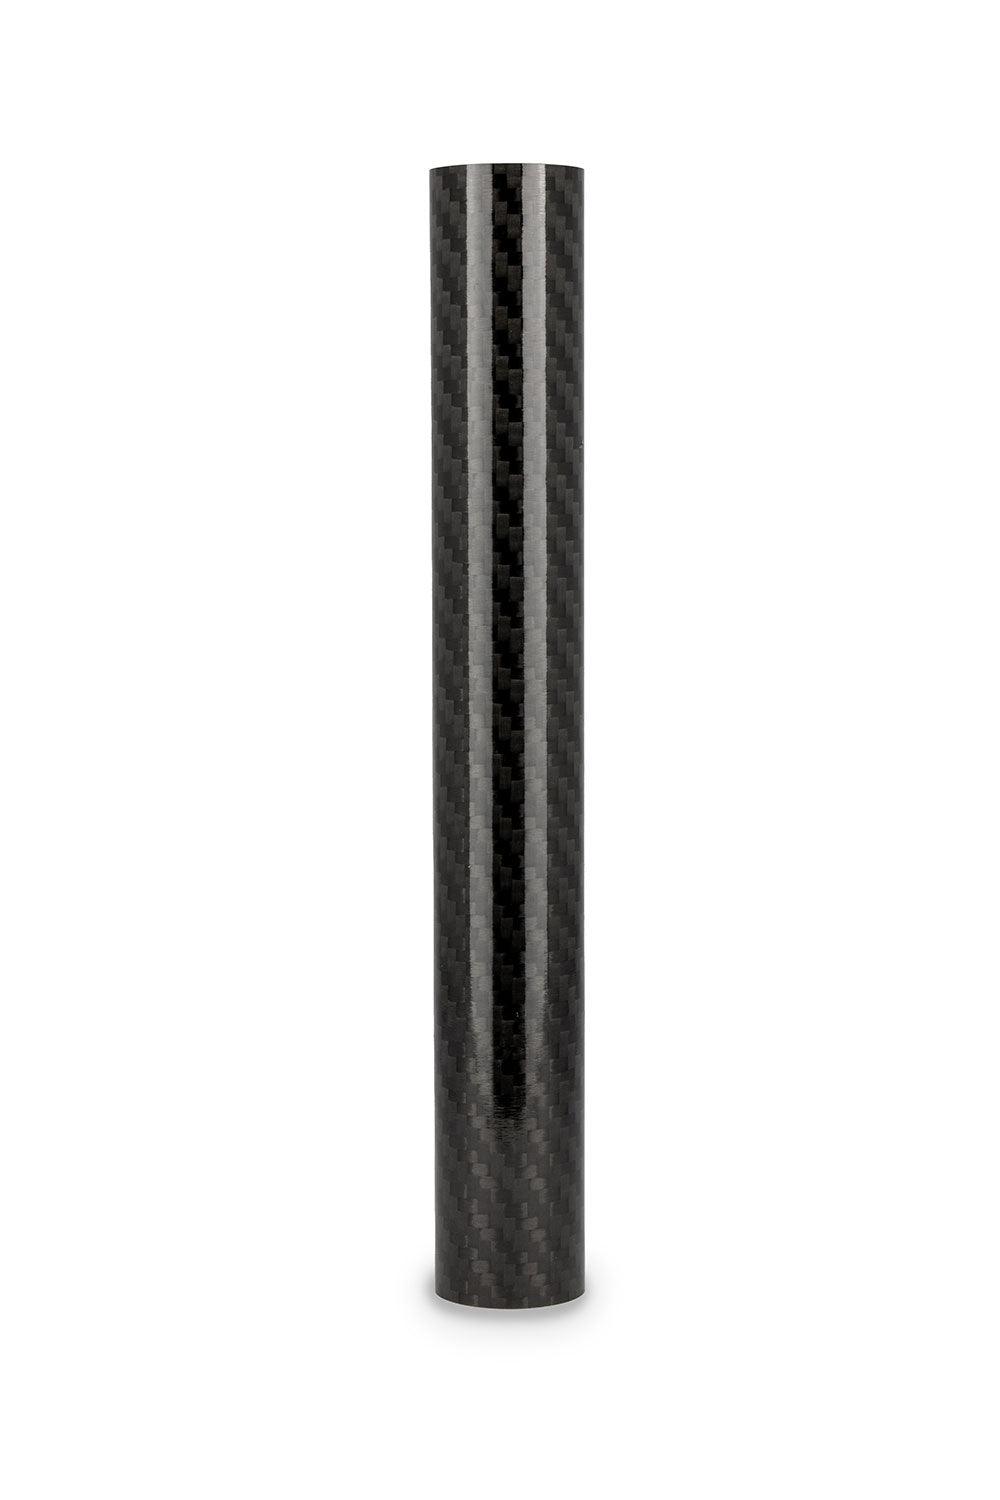 Steamulation Carbon Column Sleeve - Black Matt (Big) - shishagear - UK Shisha Hookah Black Friday